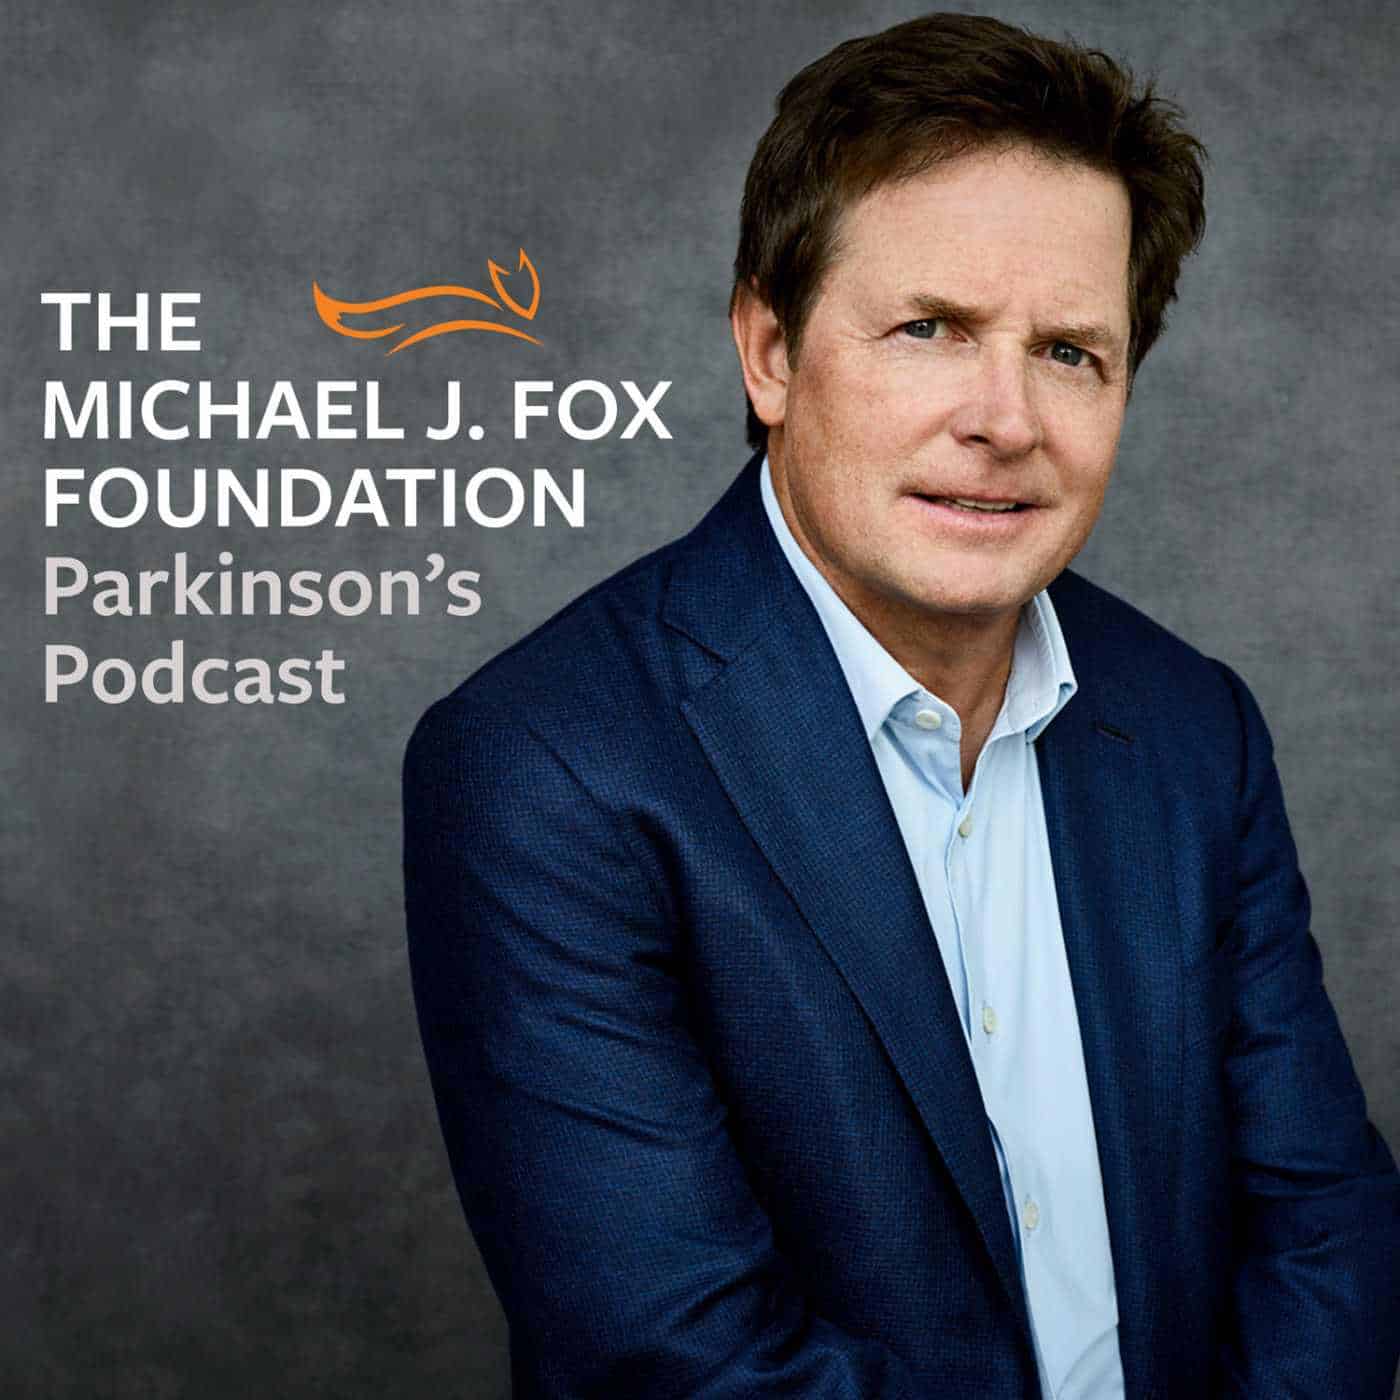 The Michael J. Fox Foundation Parkinson